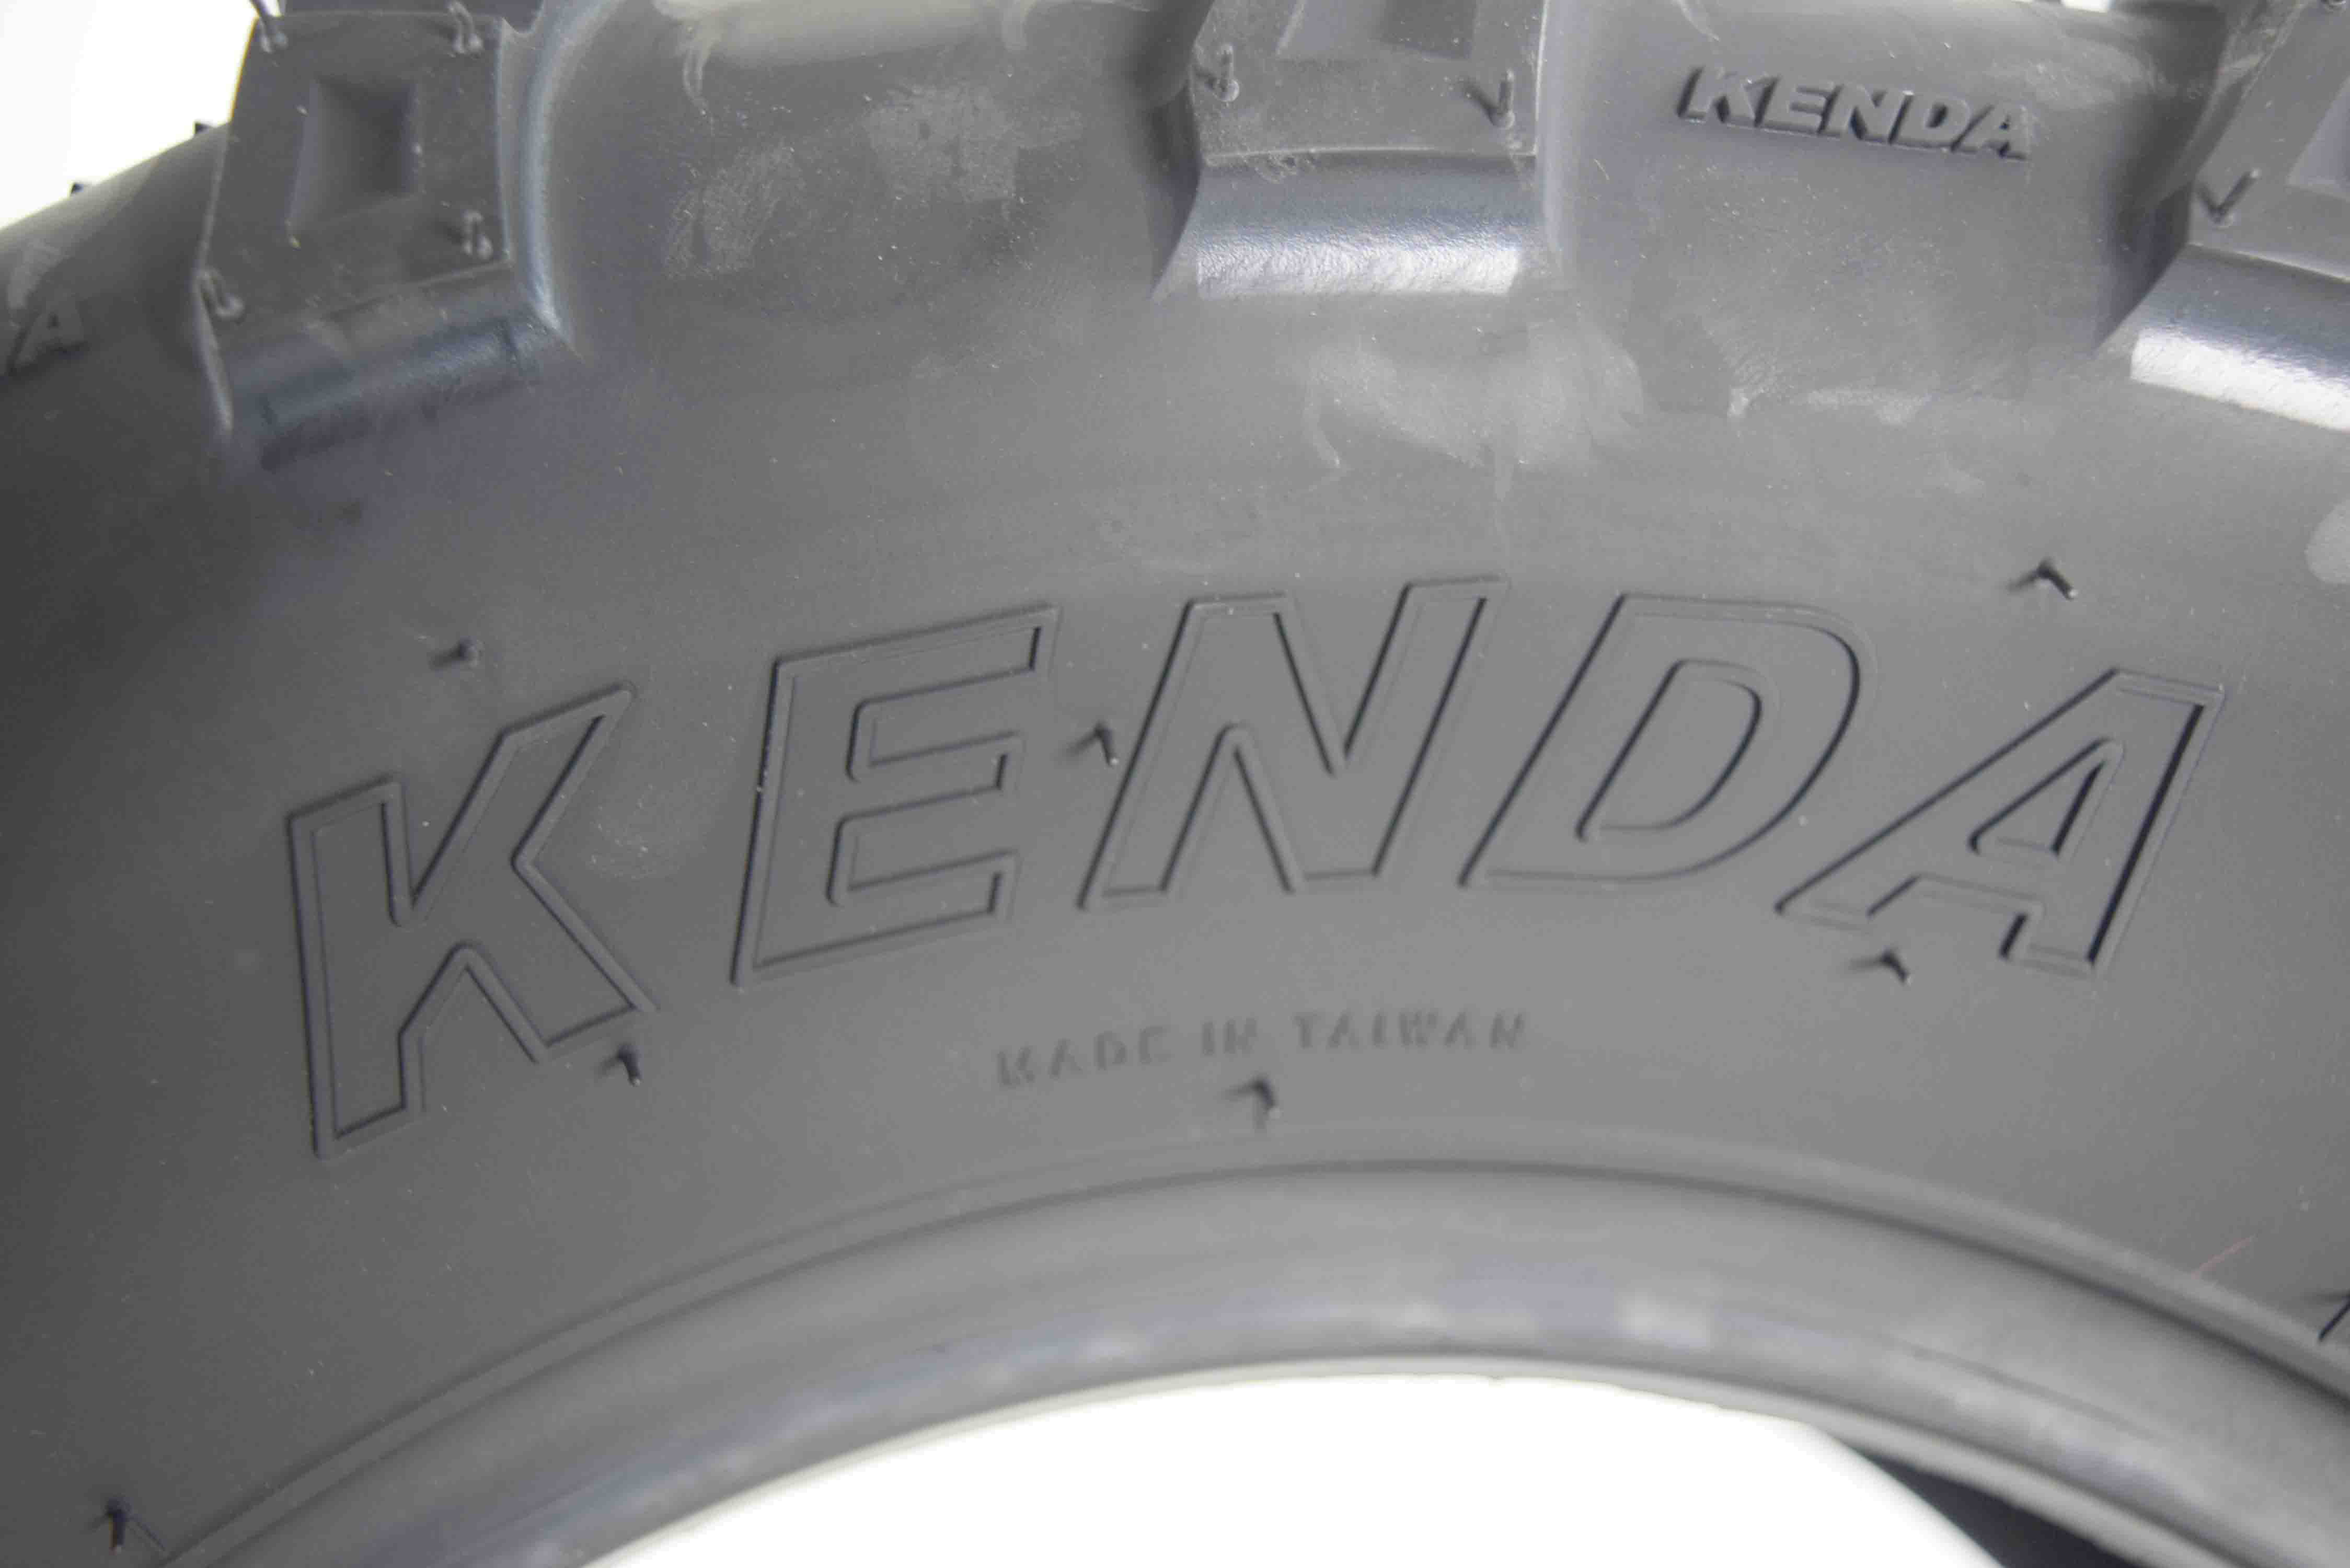 Kenda Bear Claw EVO ATV UTV All Terrain Mud Bearclaw Tires with Bottle Opener Keychain 2 Packs 25x10-12 Rear 2 Pack 